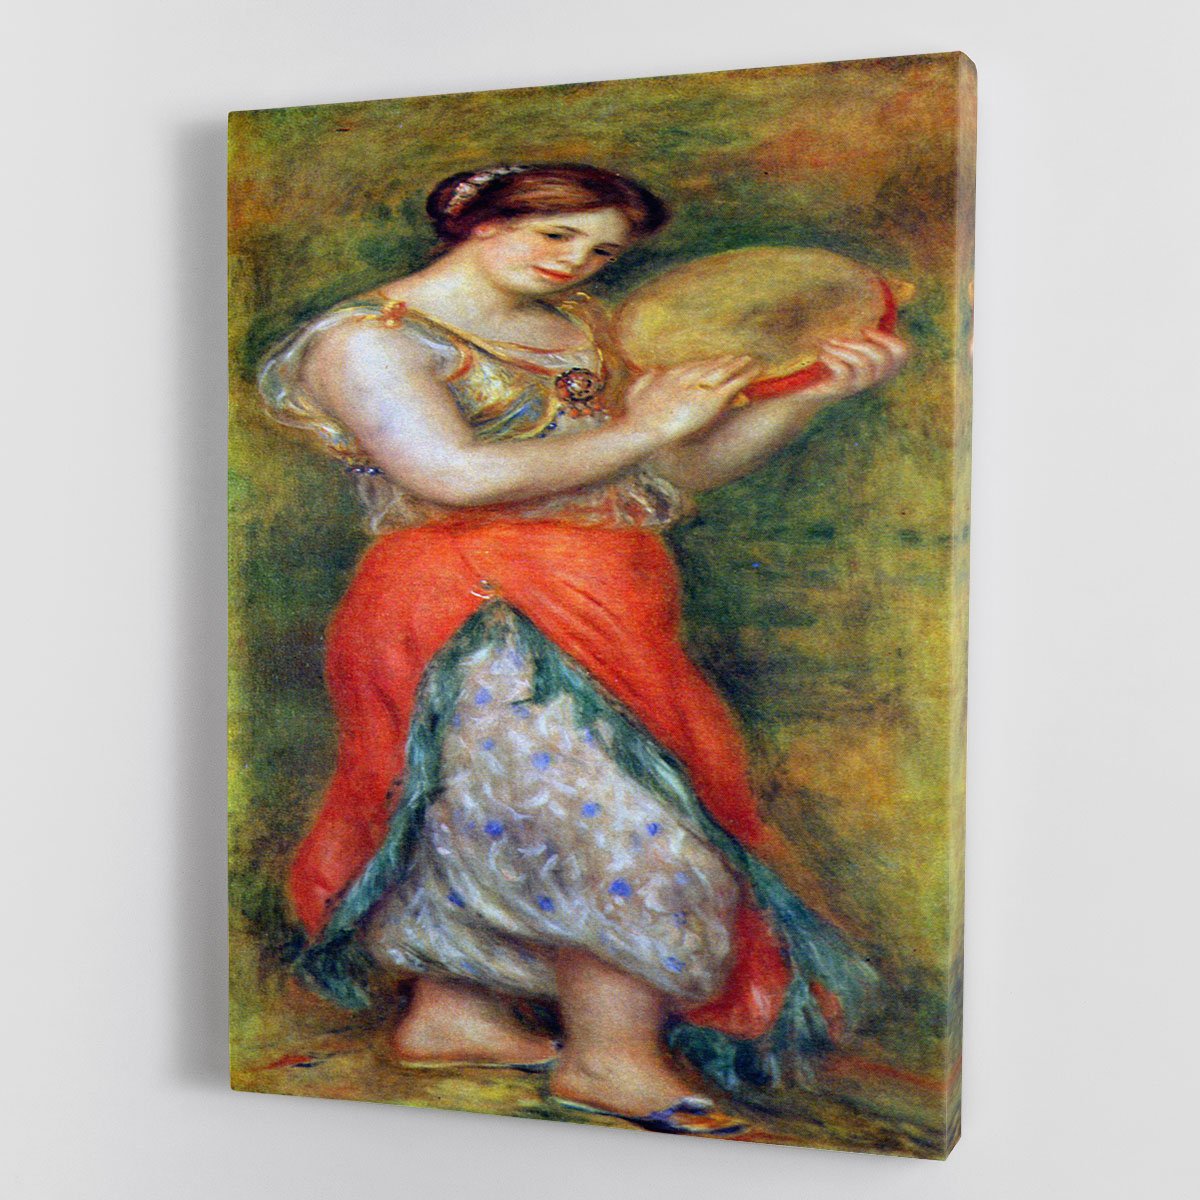 Dancer with tamborine by Renoir Canvas Print or Poster